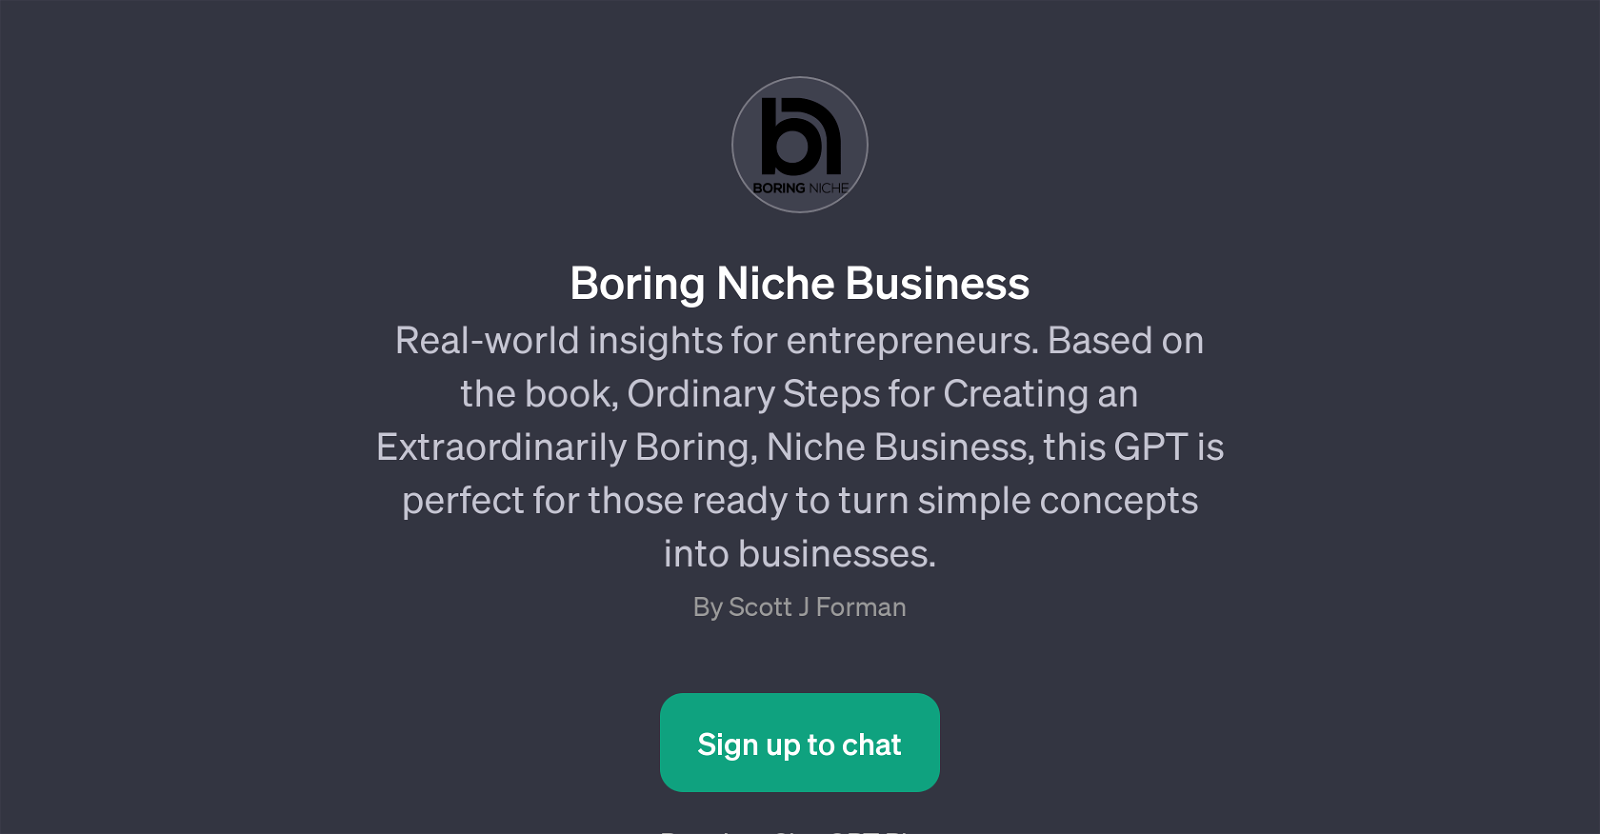 Boring Niche Business website